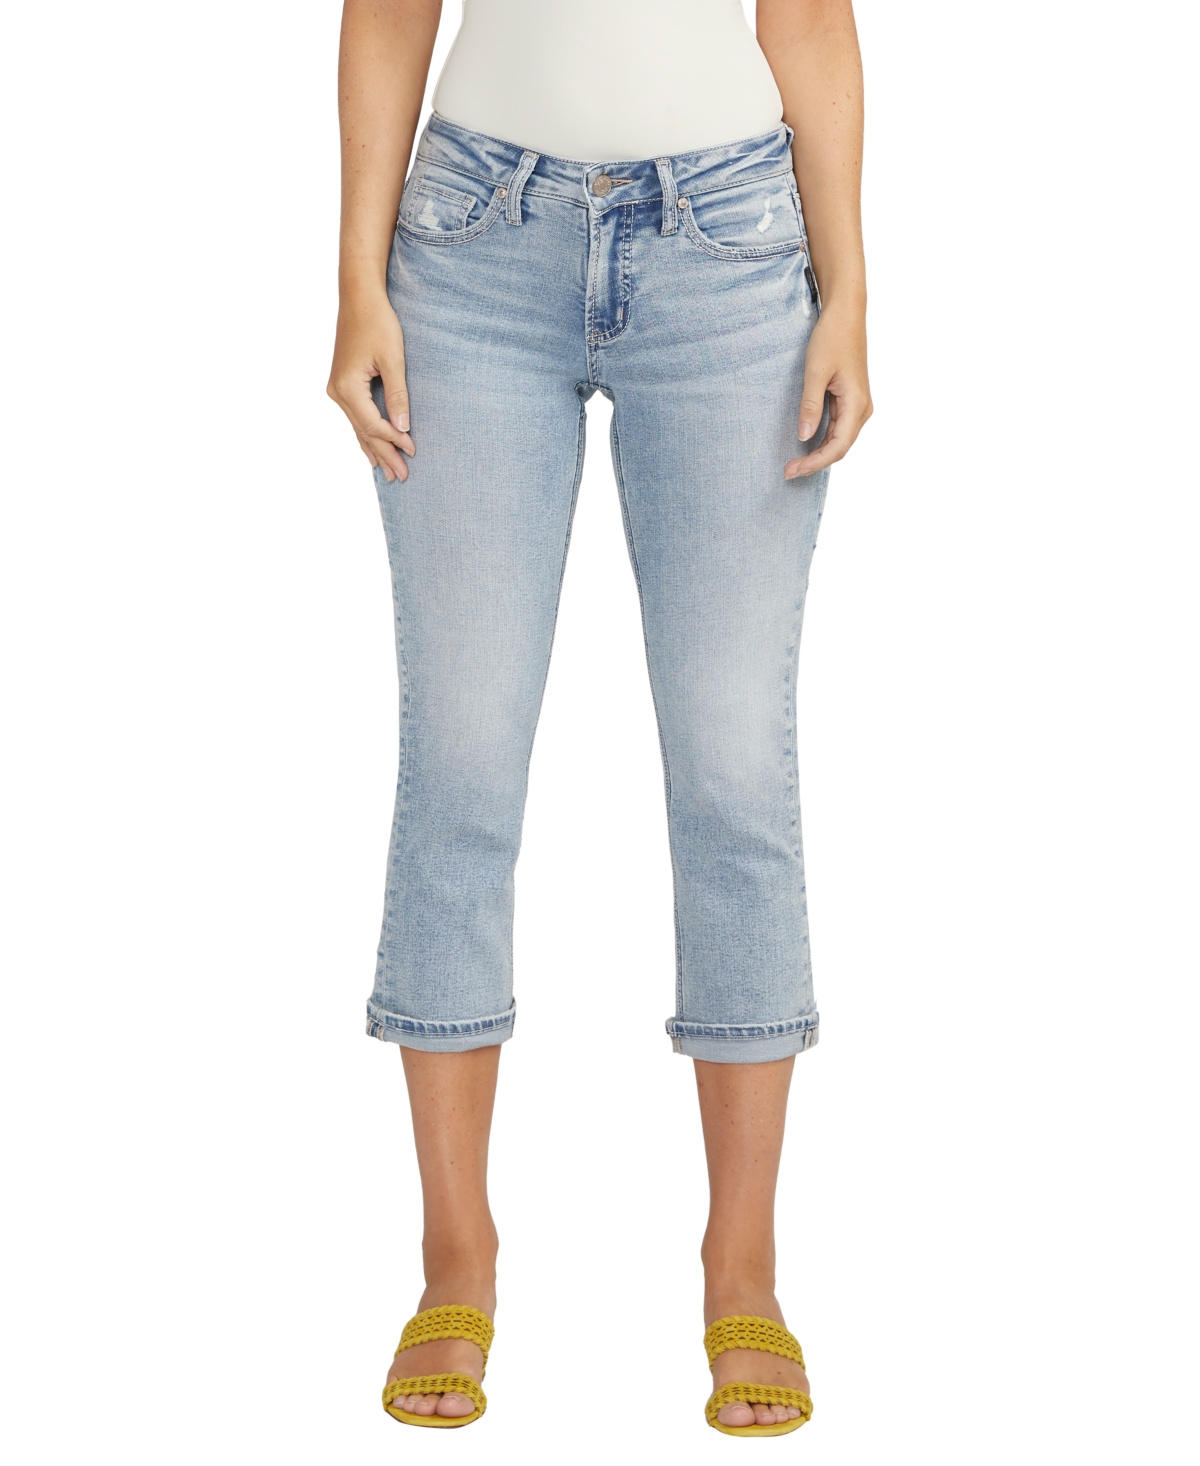 Women's Britt Low Rise Curvy Fit Capri Jeans - Indigo